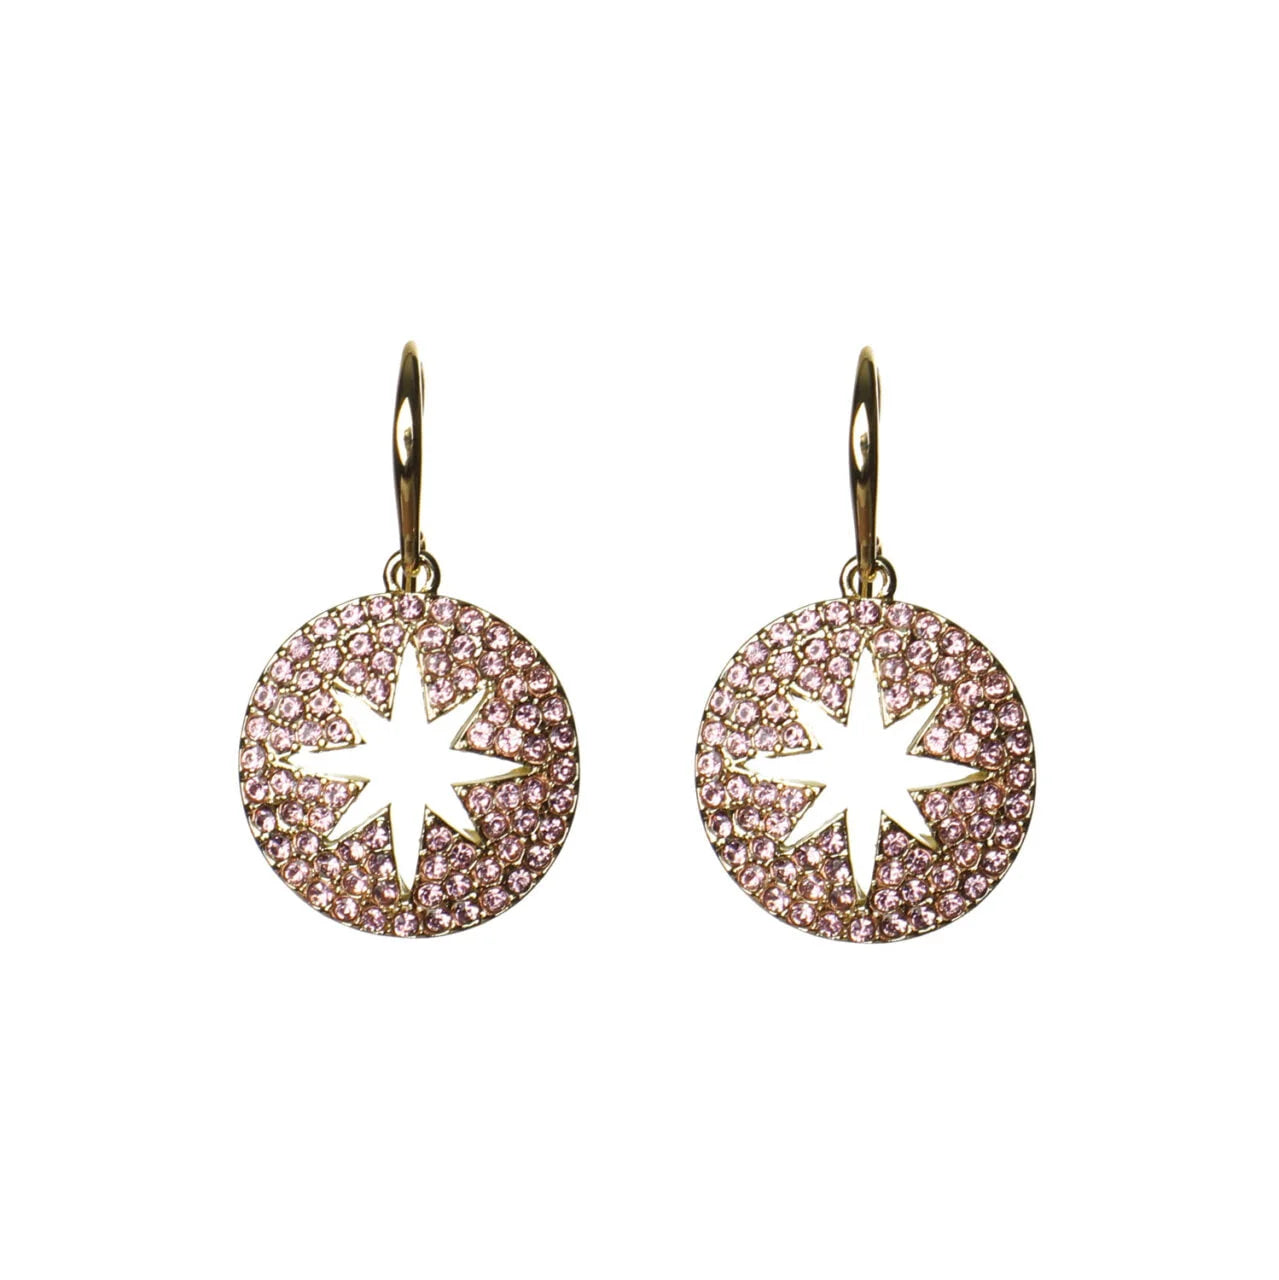 Fabulous Gifts Jewellery Earrings Star Burst Pink by Weirs of Baggot Street